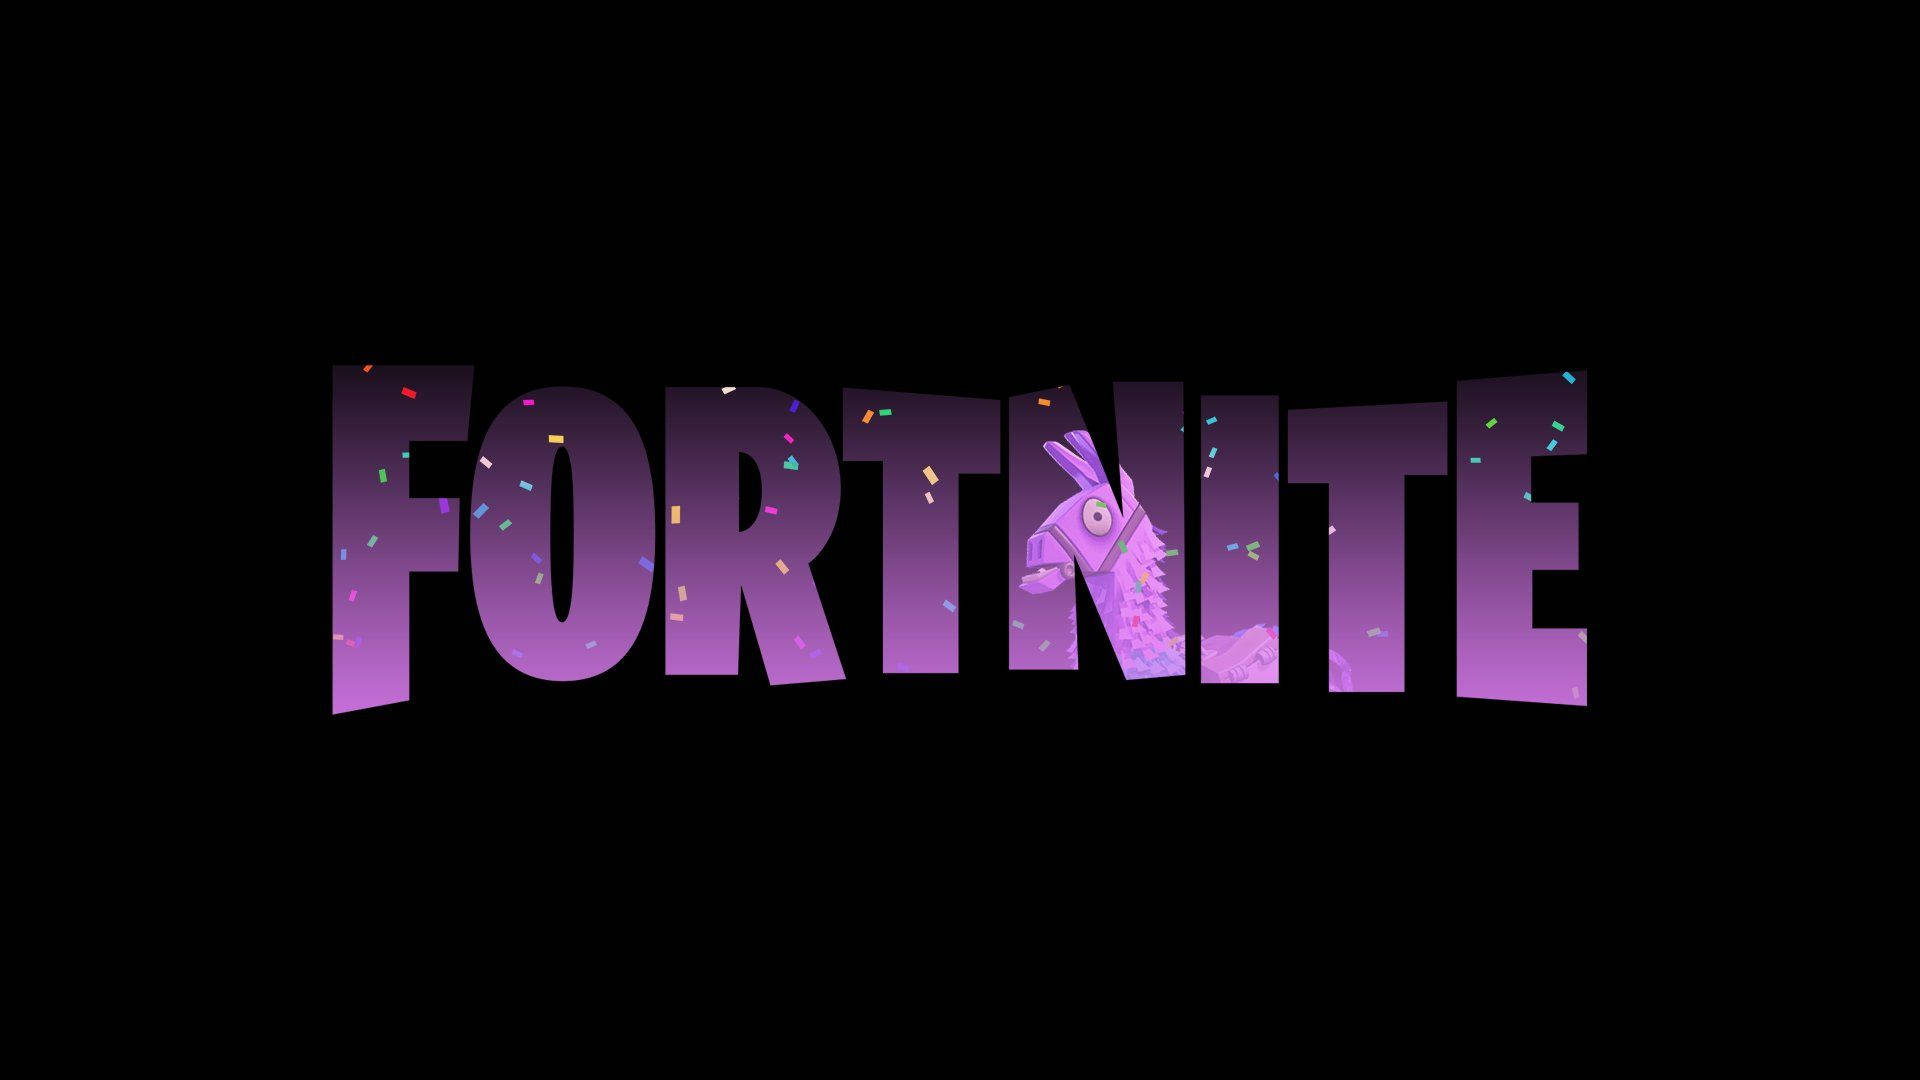 Cool Fortnite Logo Background